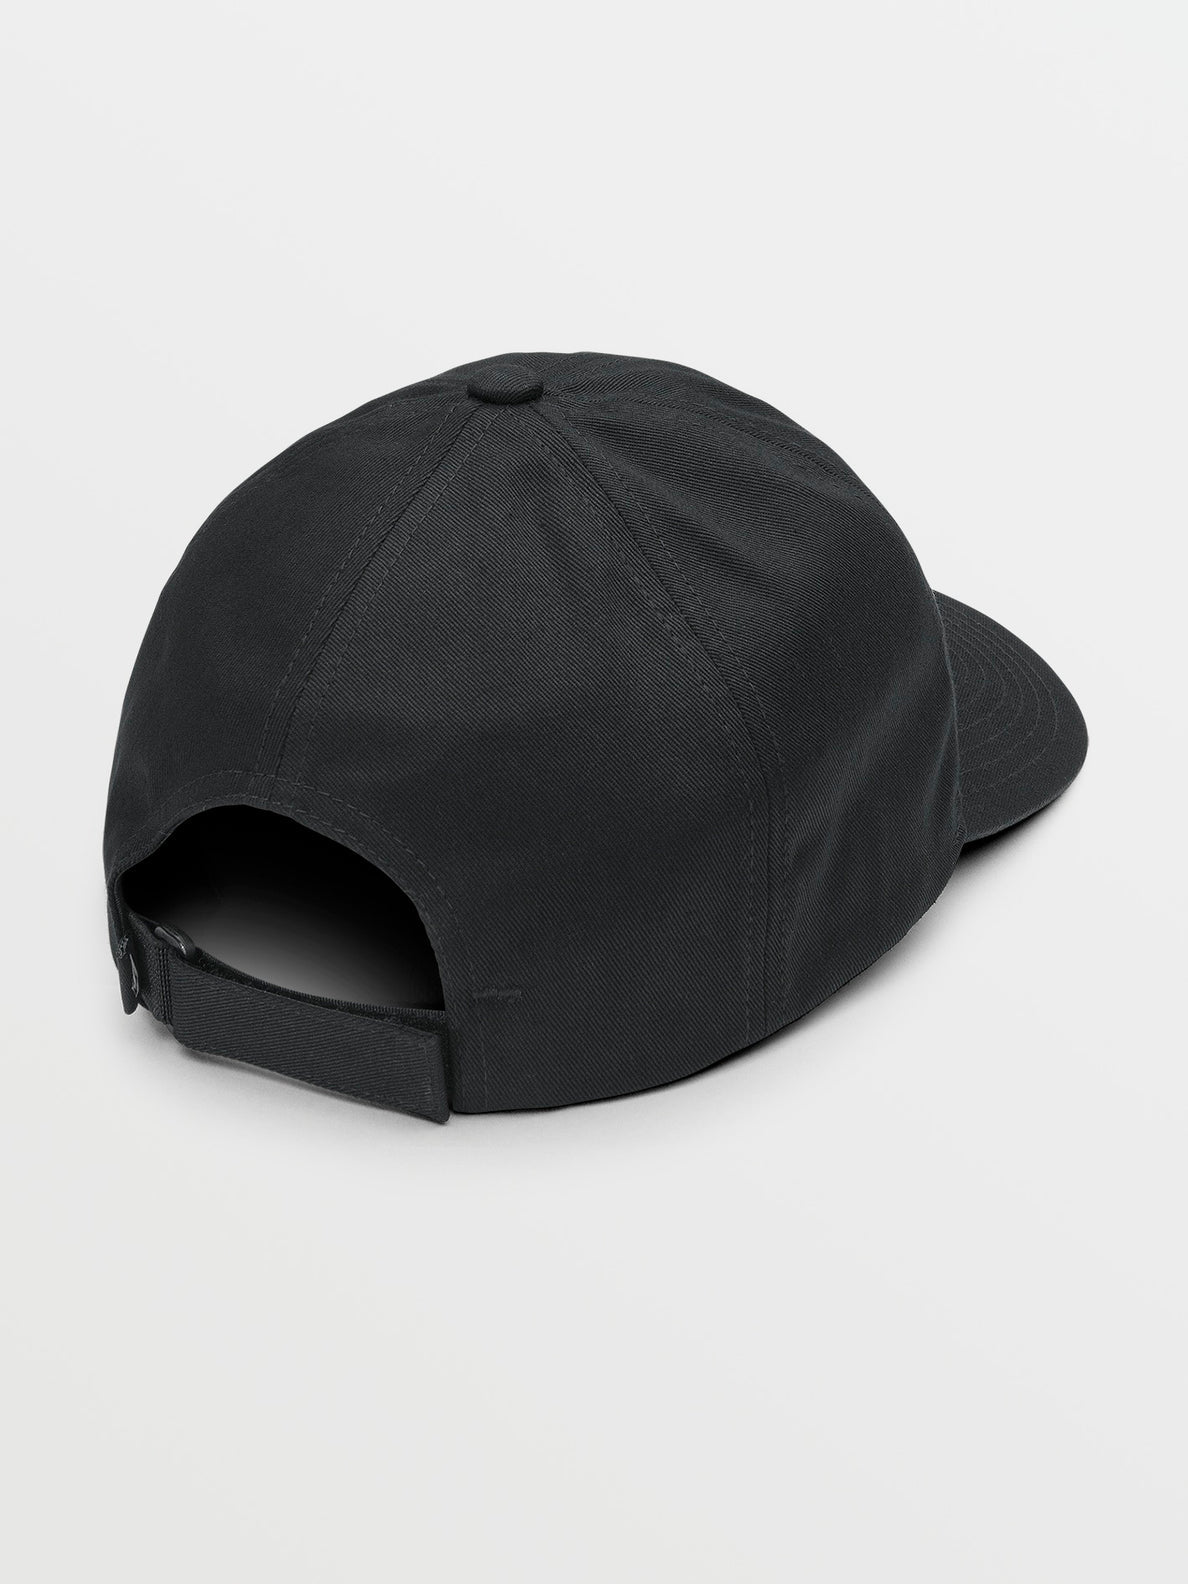 PISTOL ADJUSTABLE HAT - BLACK